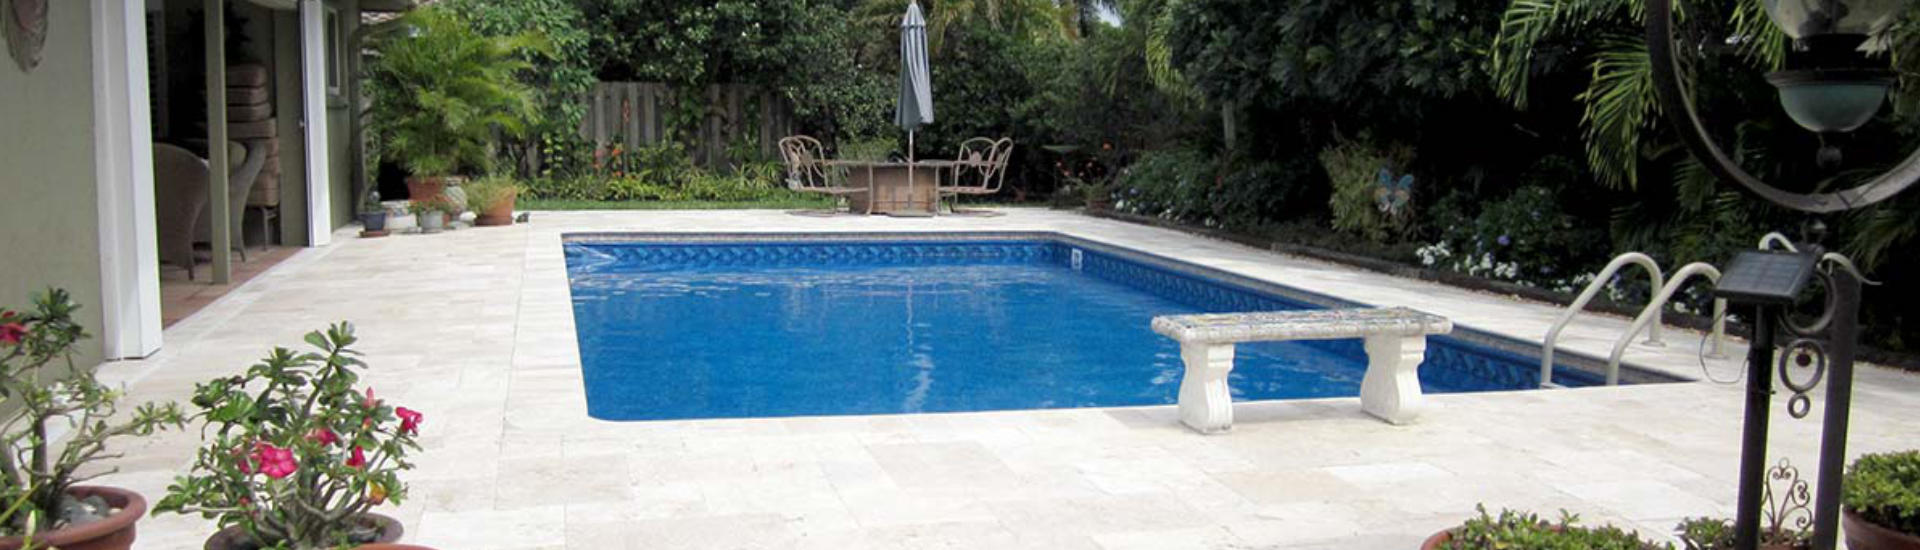 backyard swimming pool with vinyl liner